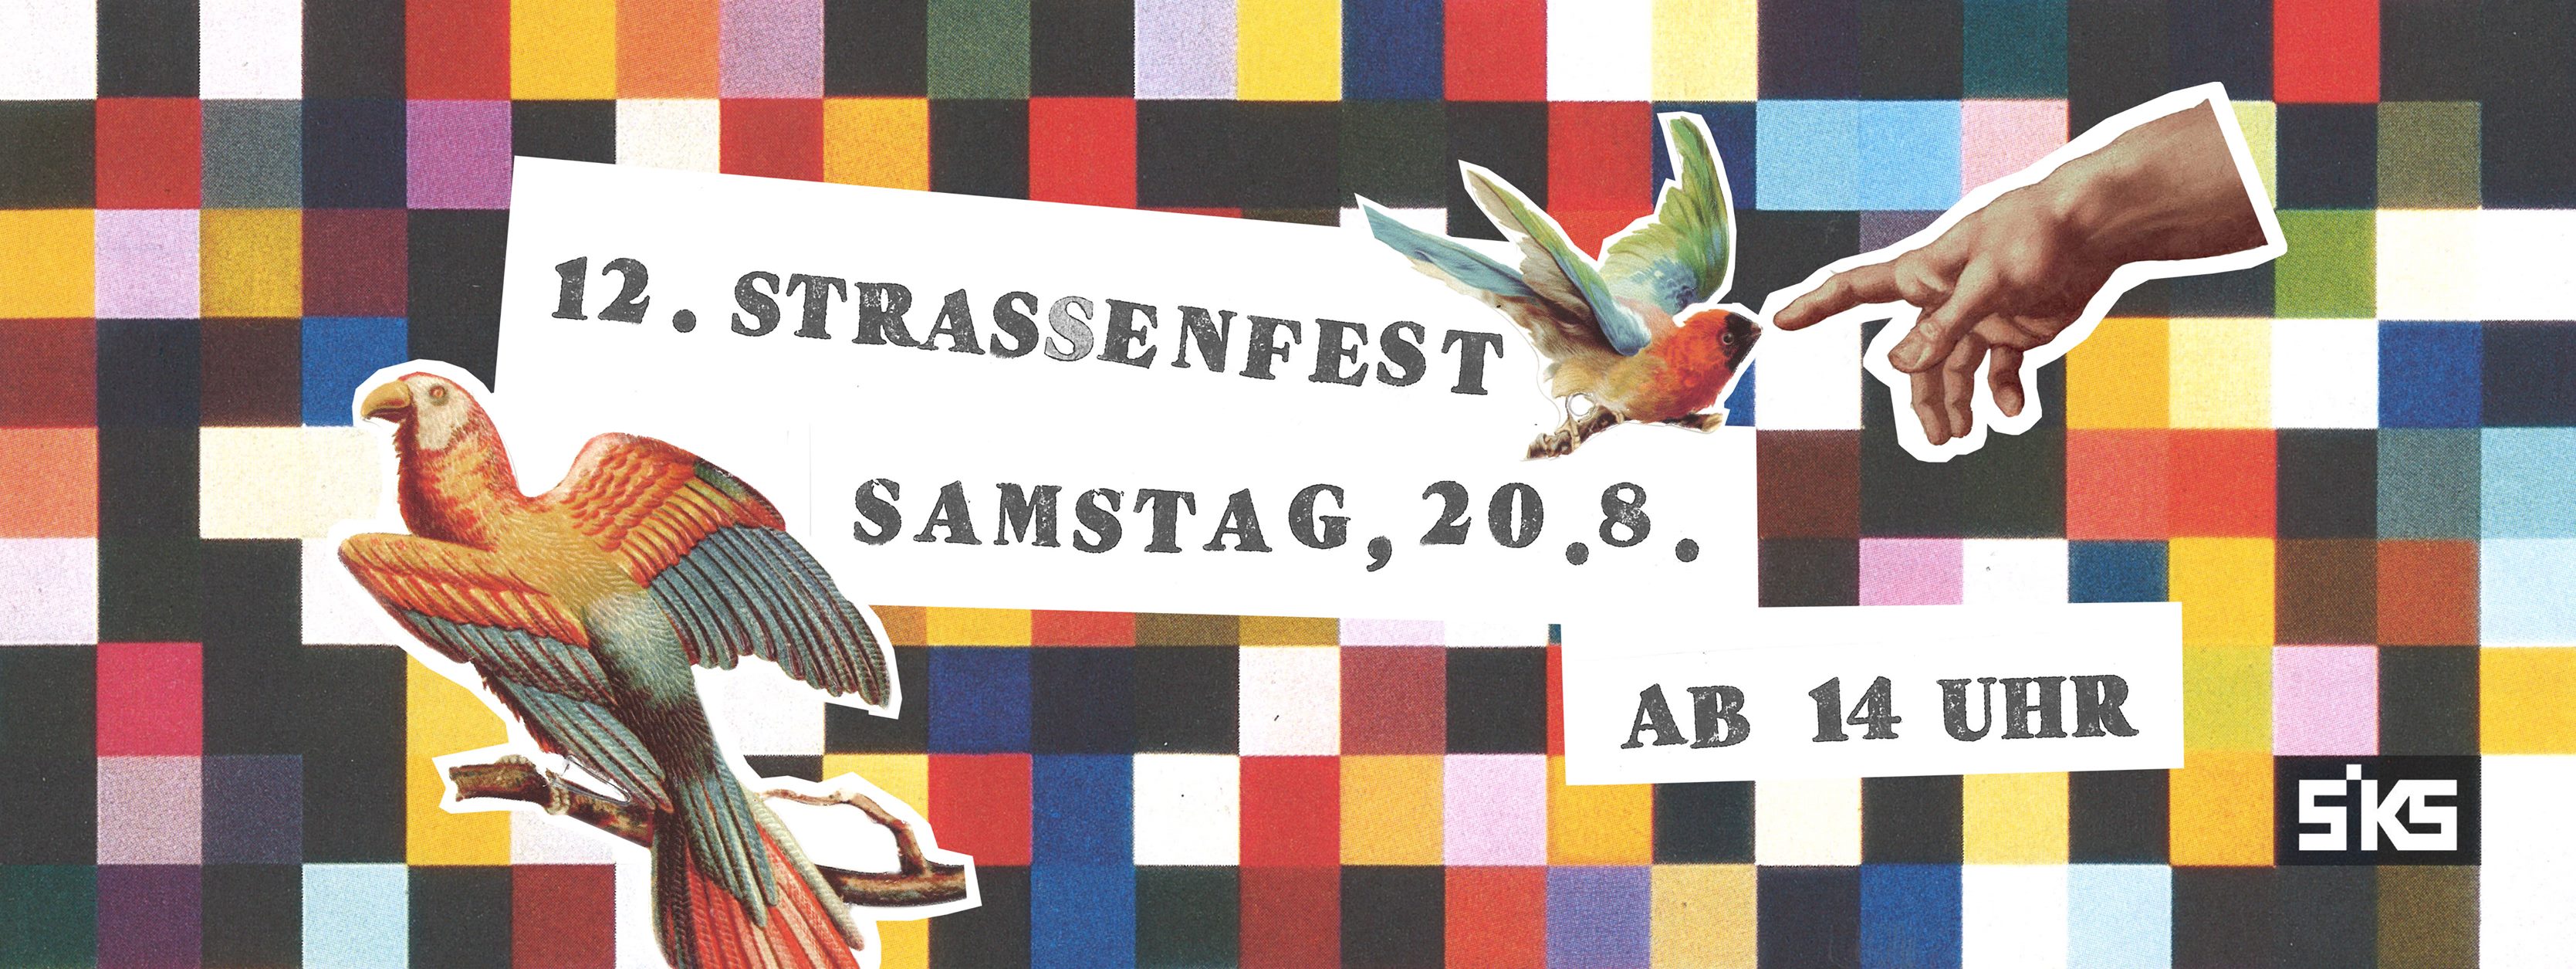 Strassenfest 2016